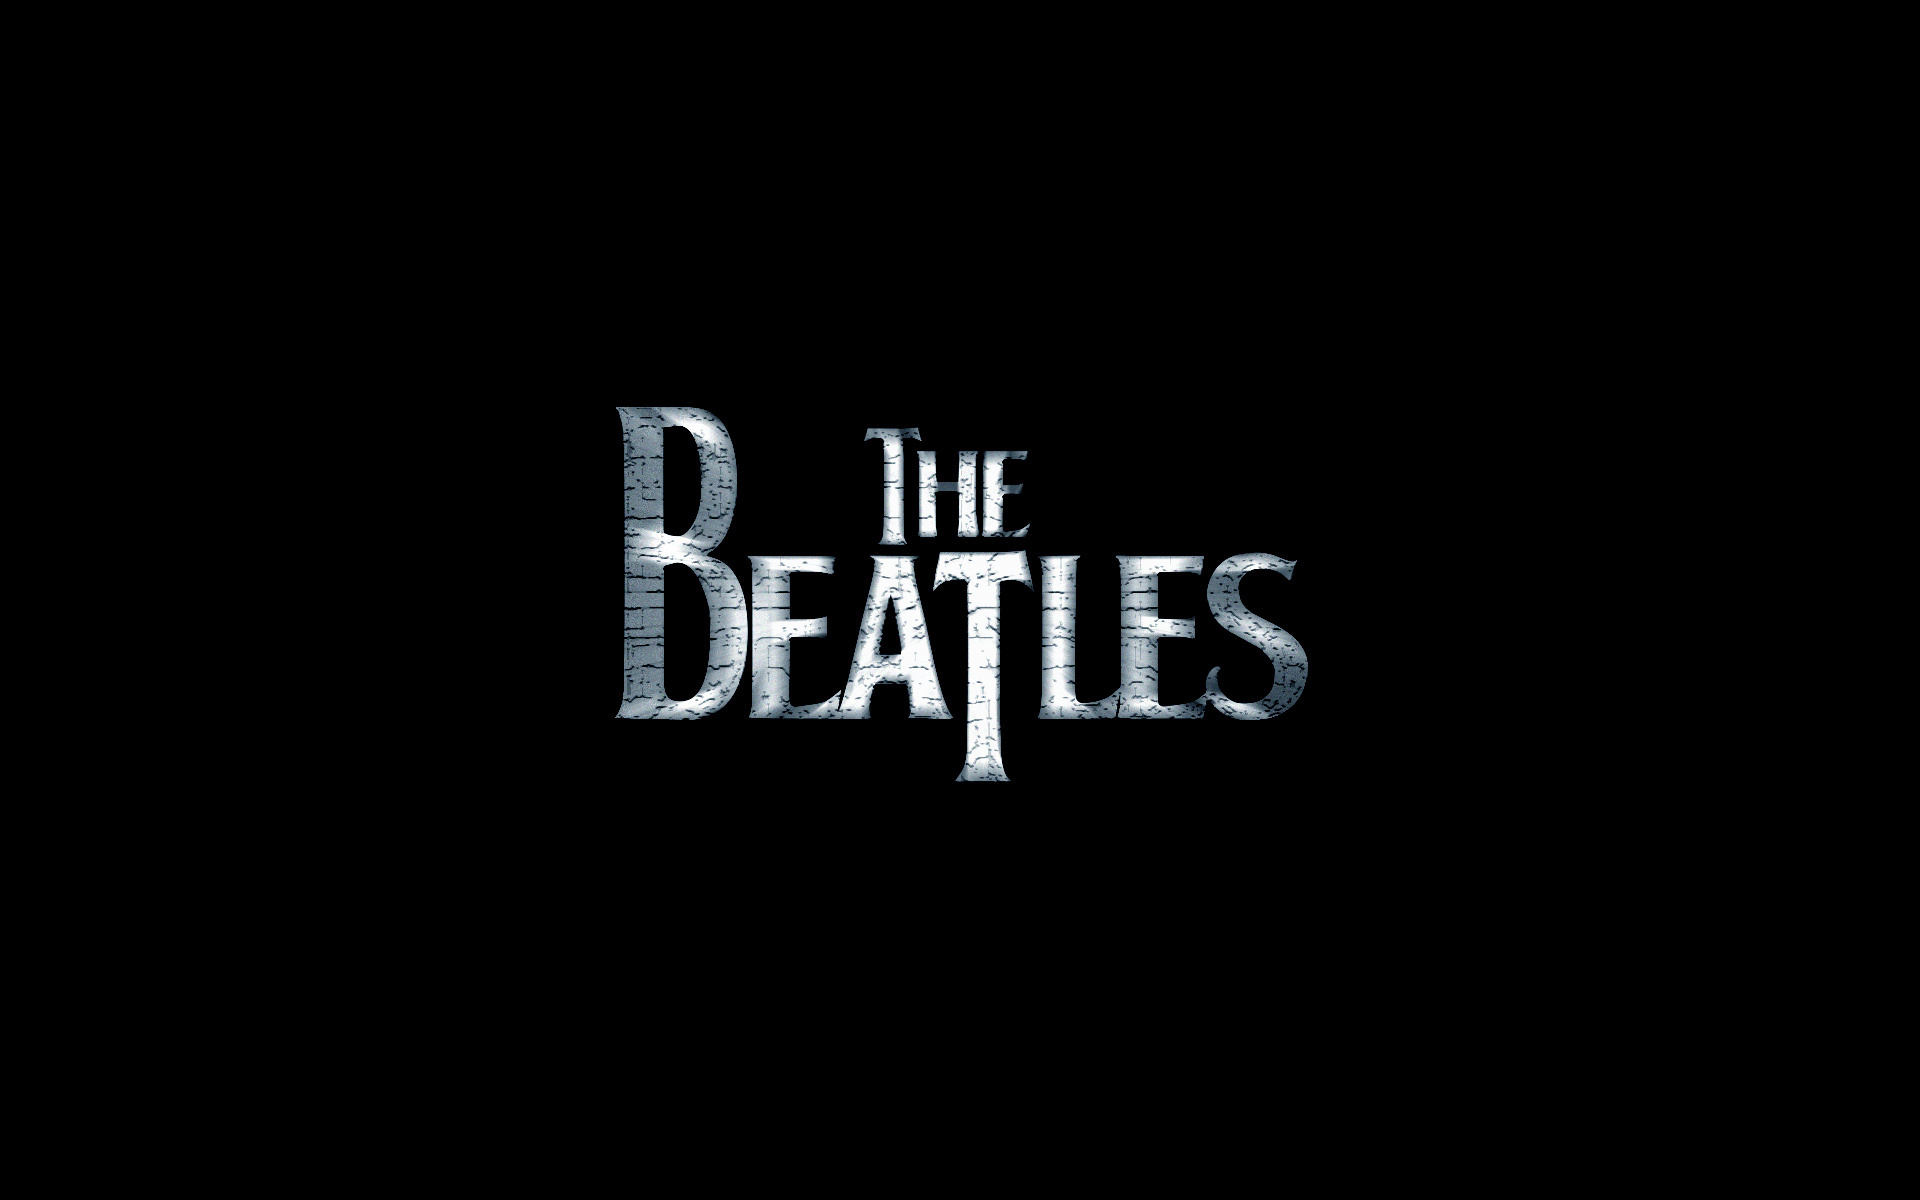 The Beatles Wallpaper The Beatles 13 1920x1200